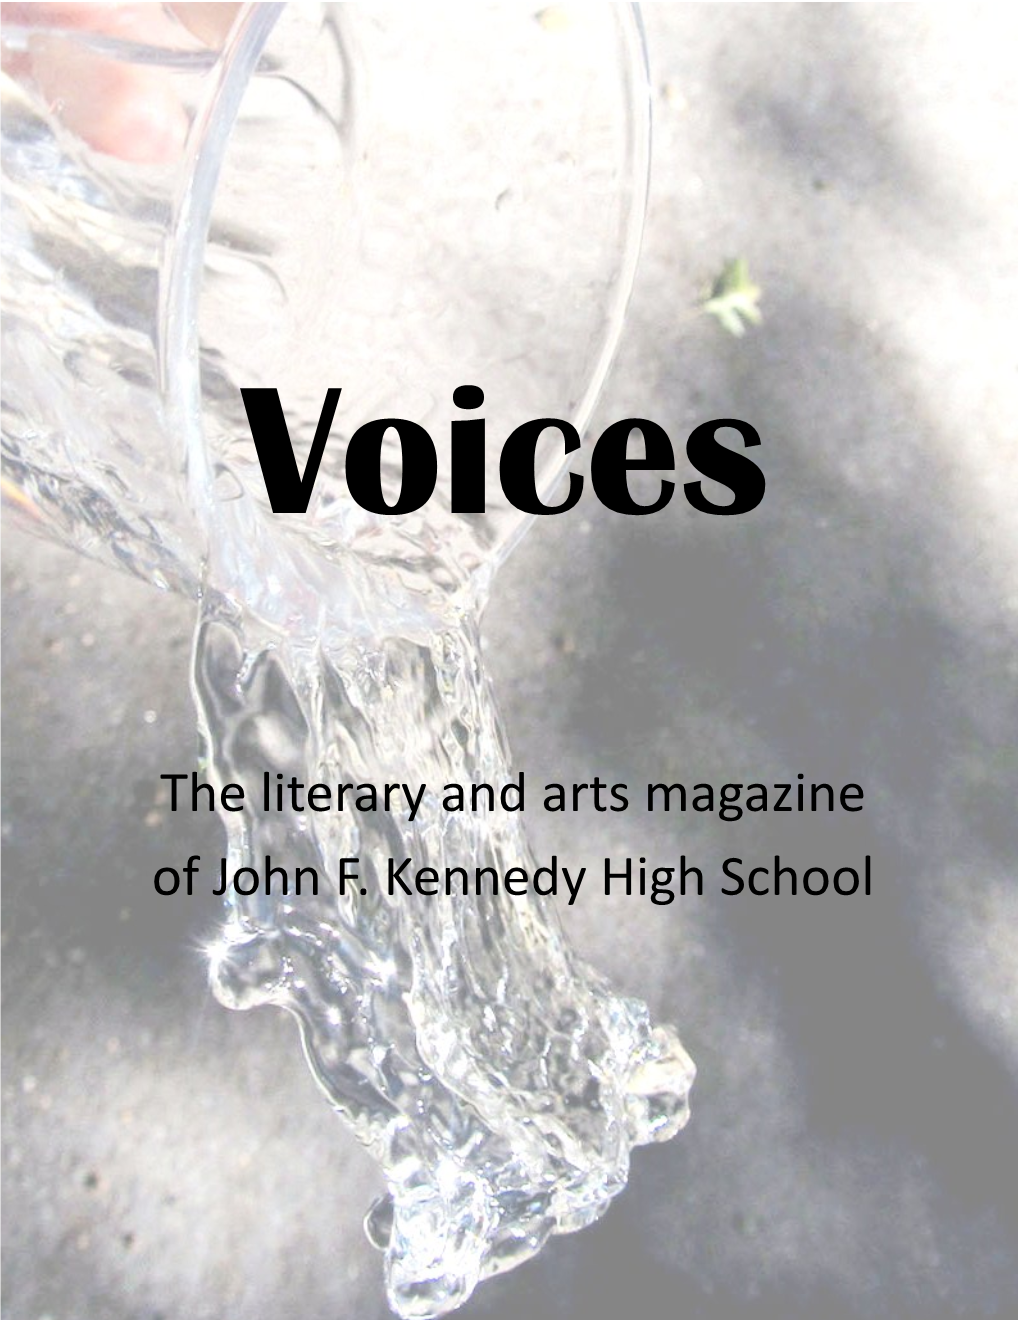 The Literary and Arts Magazine of John F. Kennedy High School